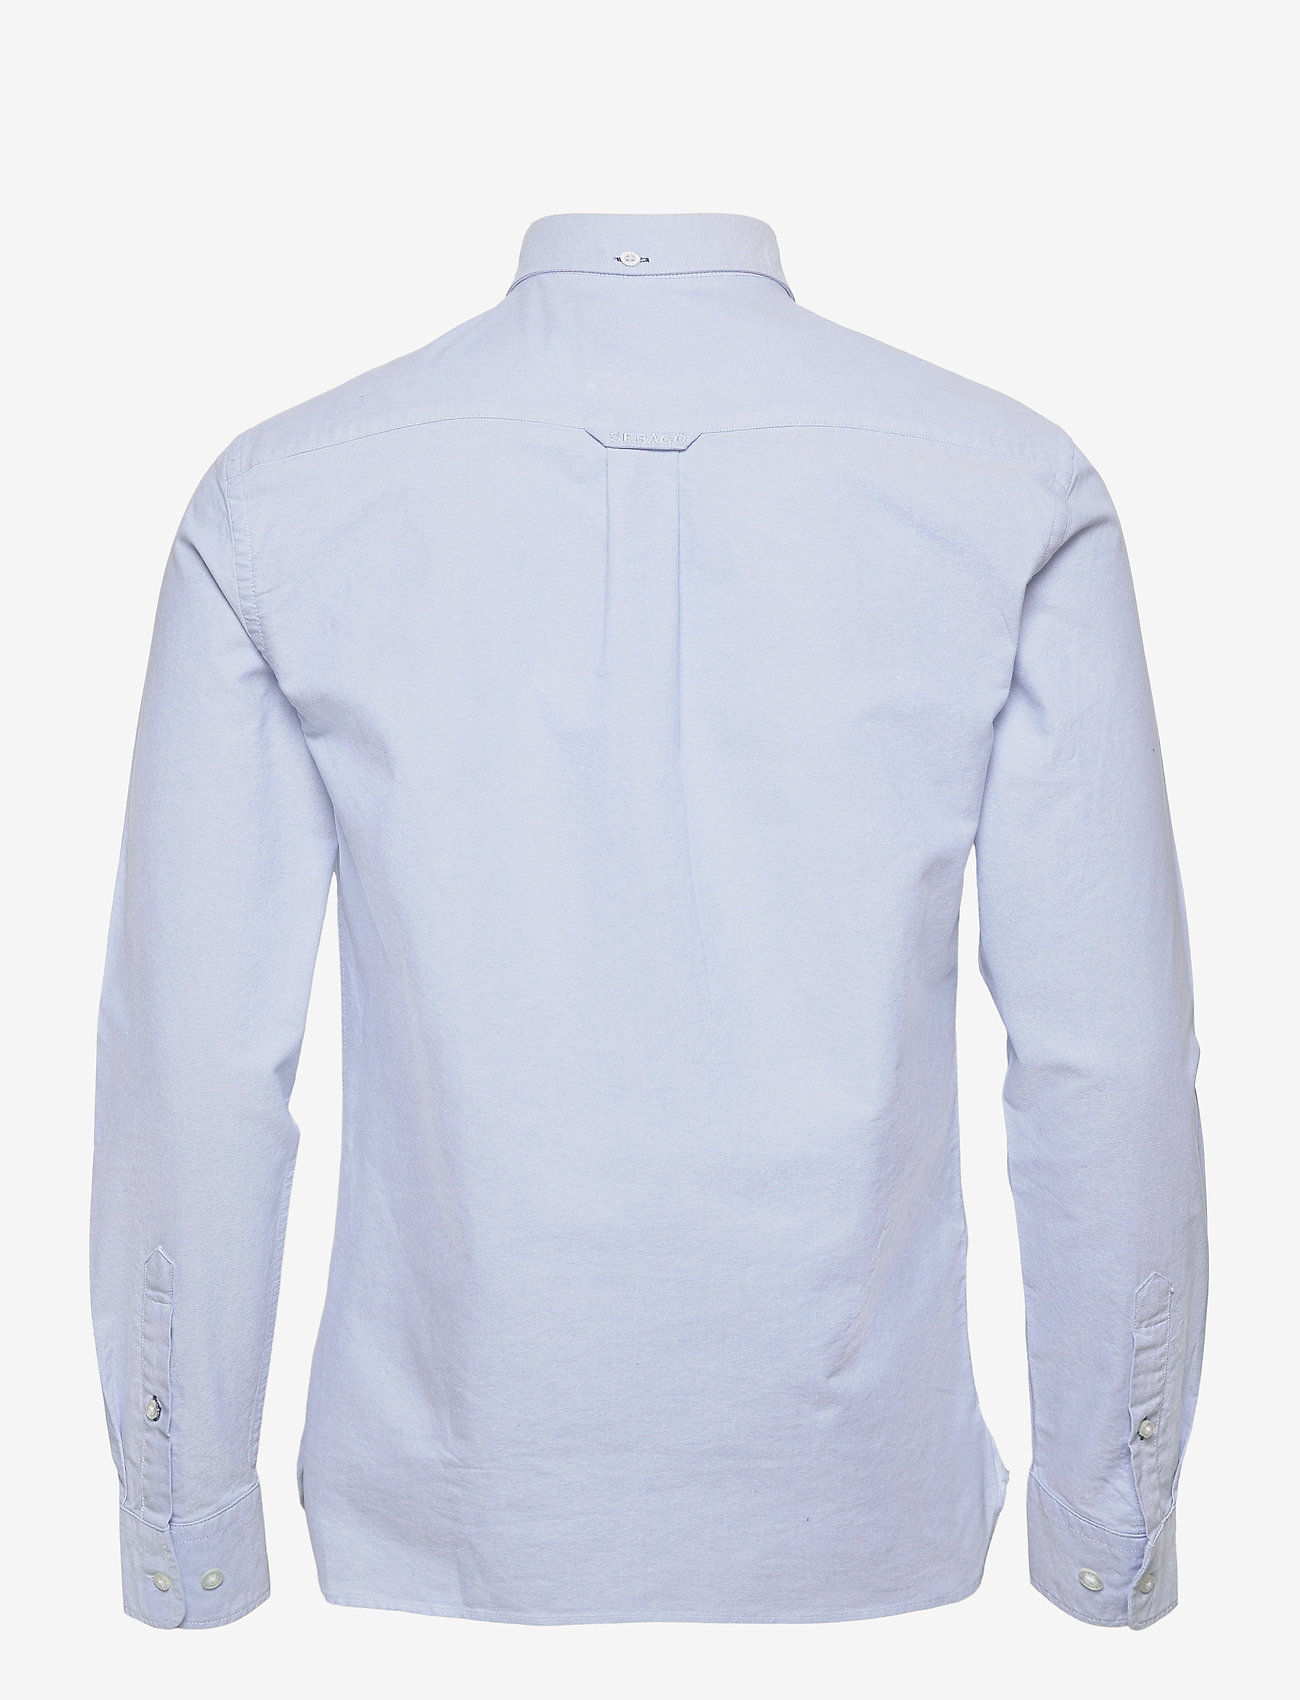 Sebago - Oxford Classic Shirt B.D. - oksfordo marškiniai - light blue - 1